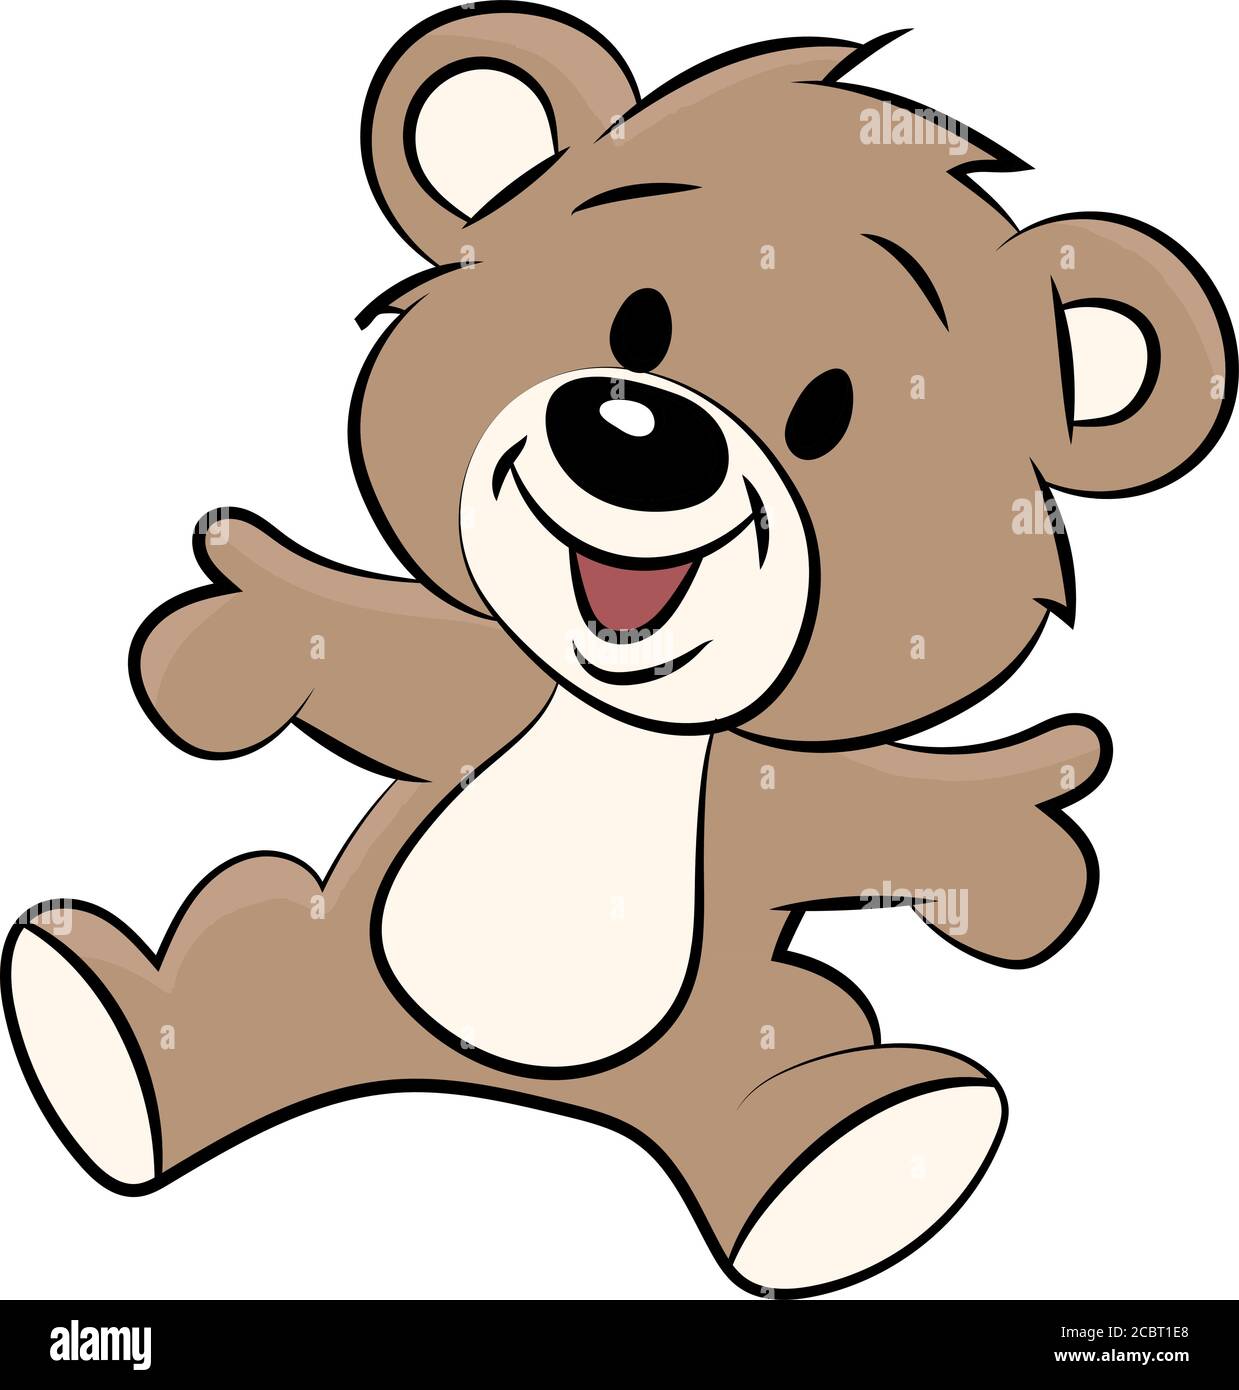 Dibujo de un vector de oso de peluche para niños Imagen Vector de stock -  Alamy